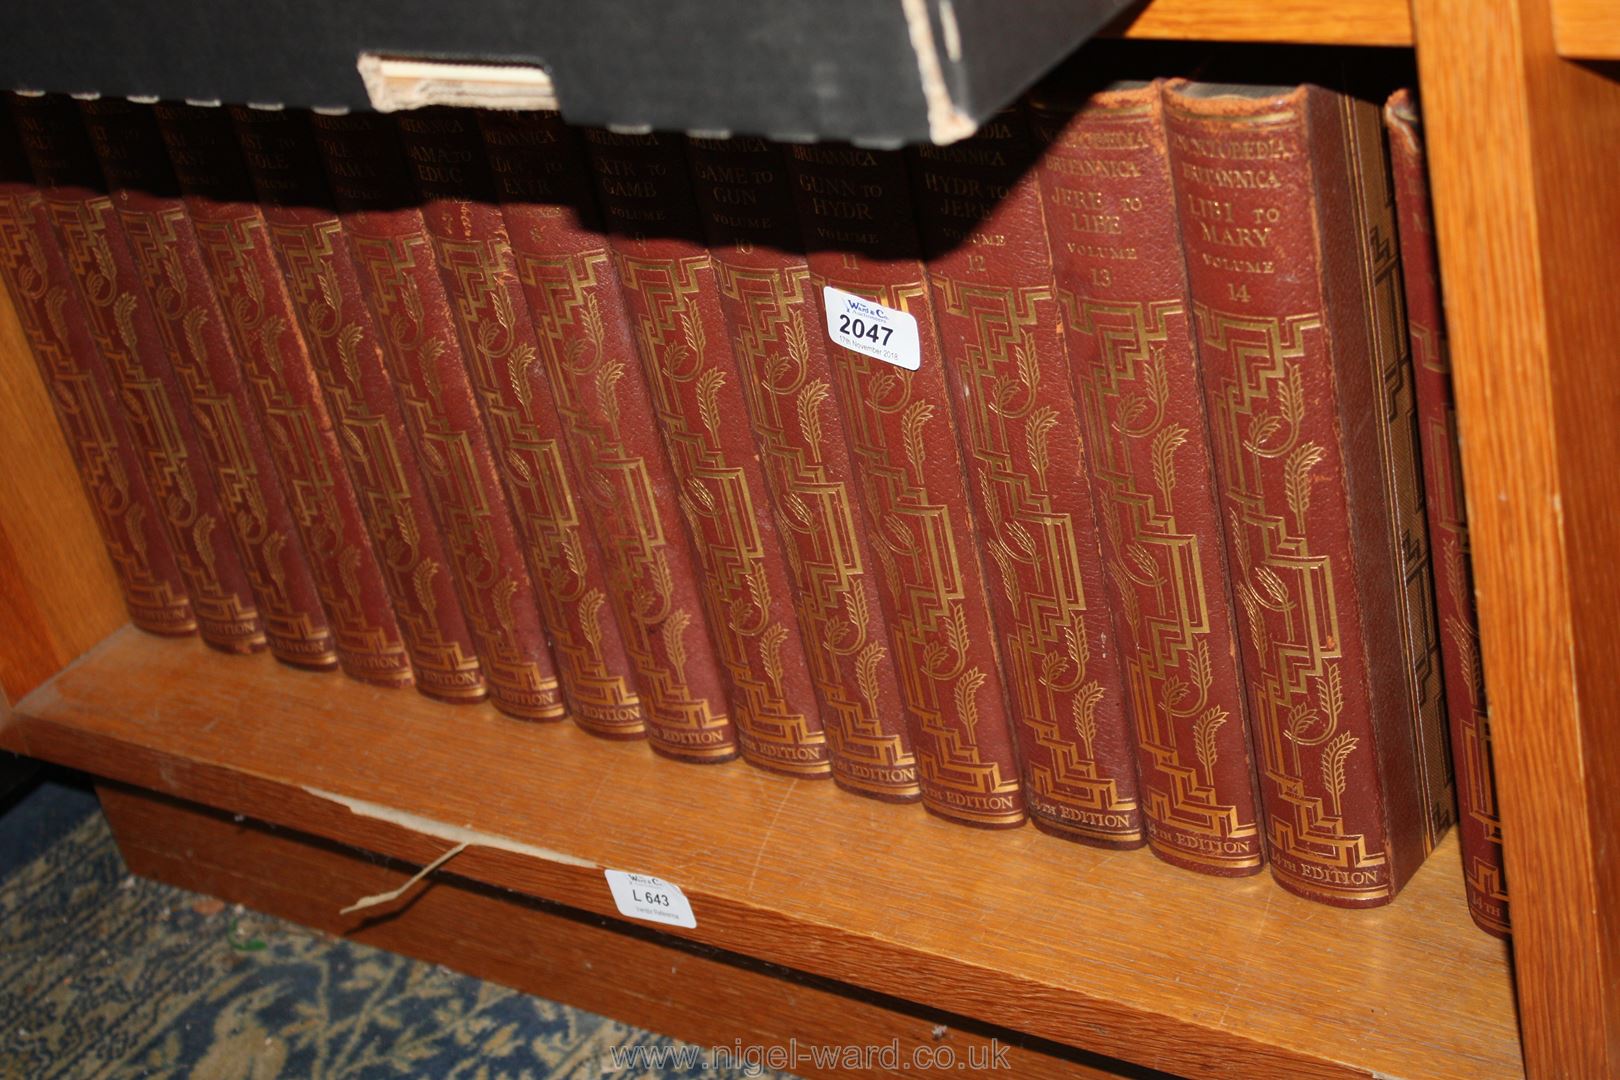 Twenty-four volumes of Encyclopedia Britannica 14th edition.